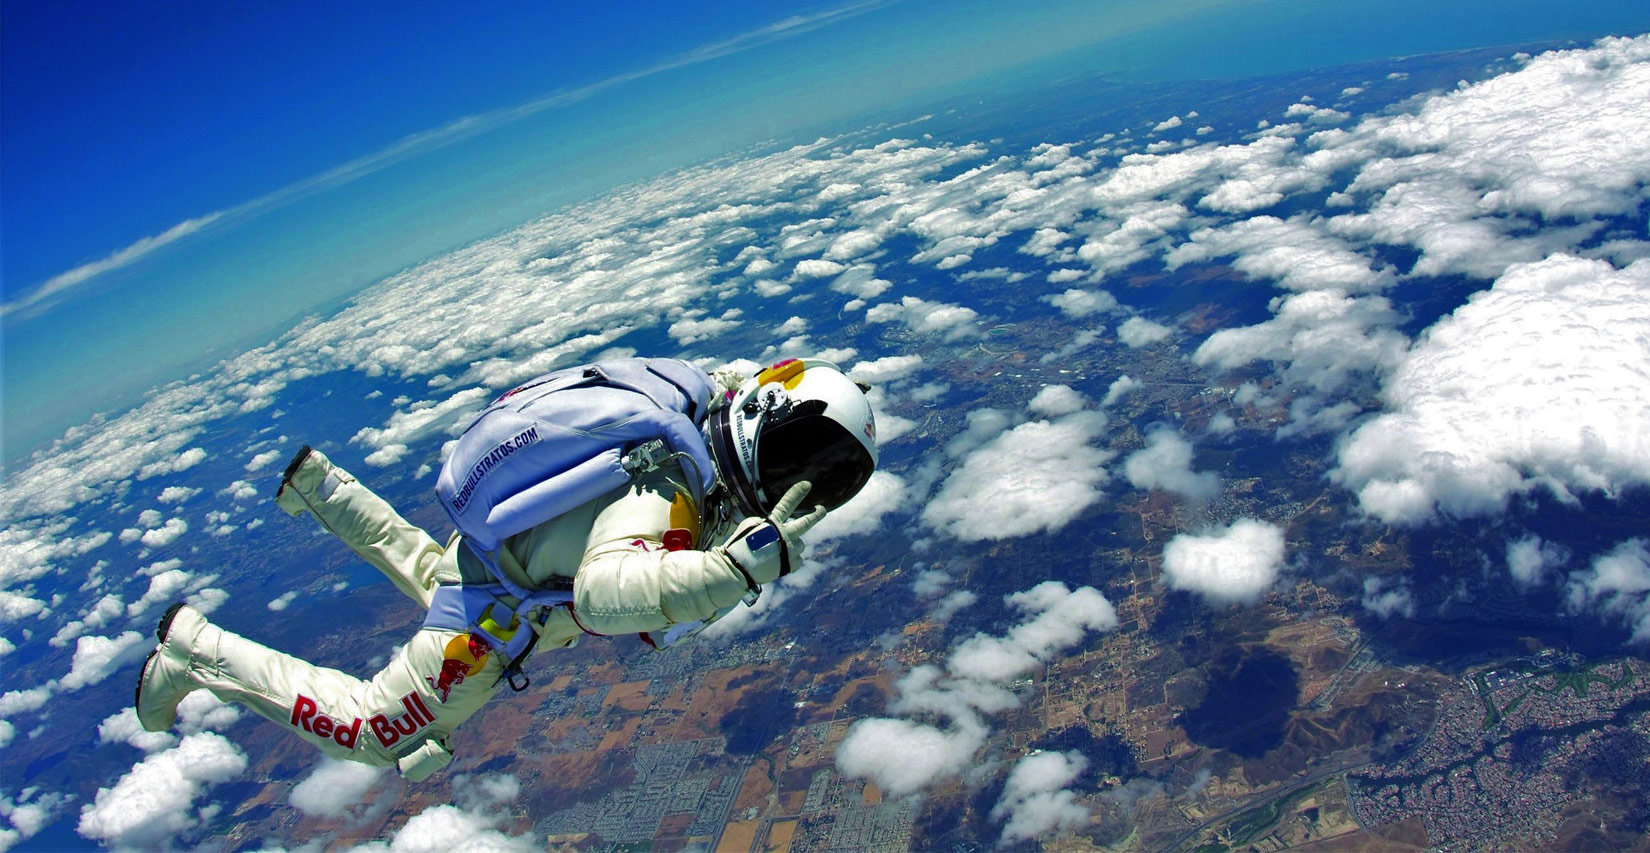 Skydiver Felix Baumgartner didn’t feel a thing